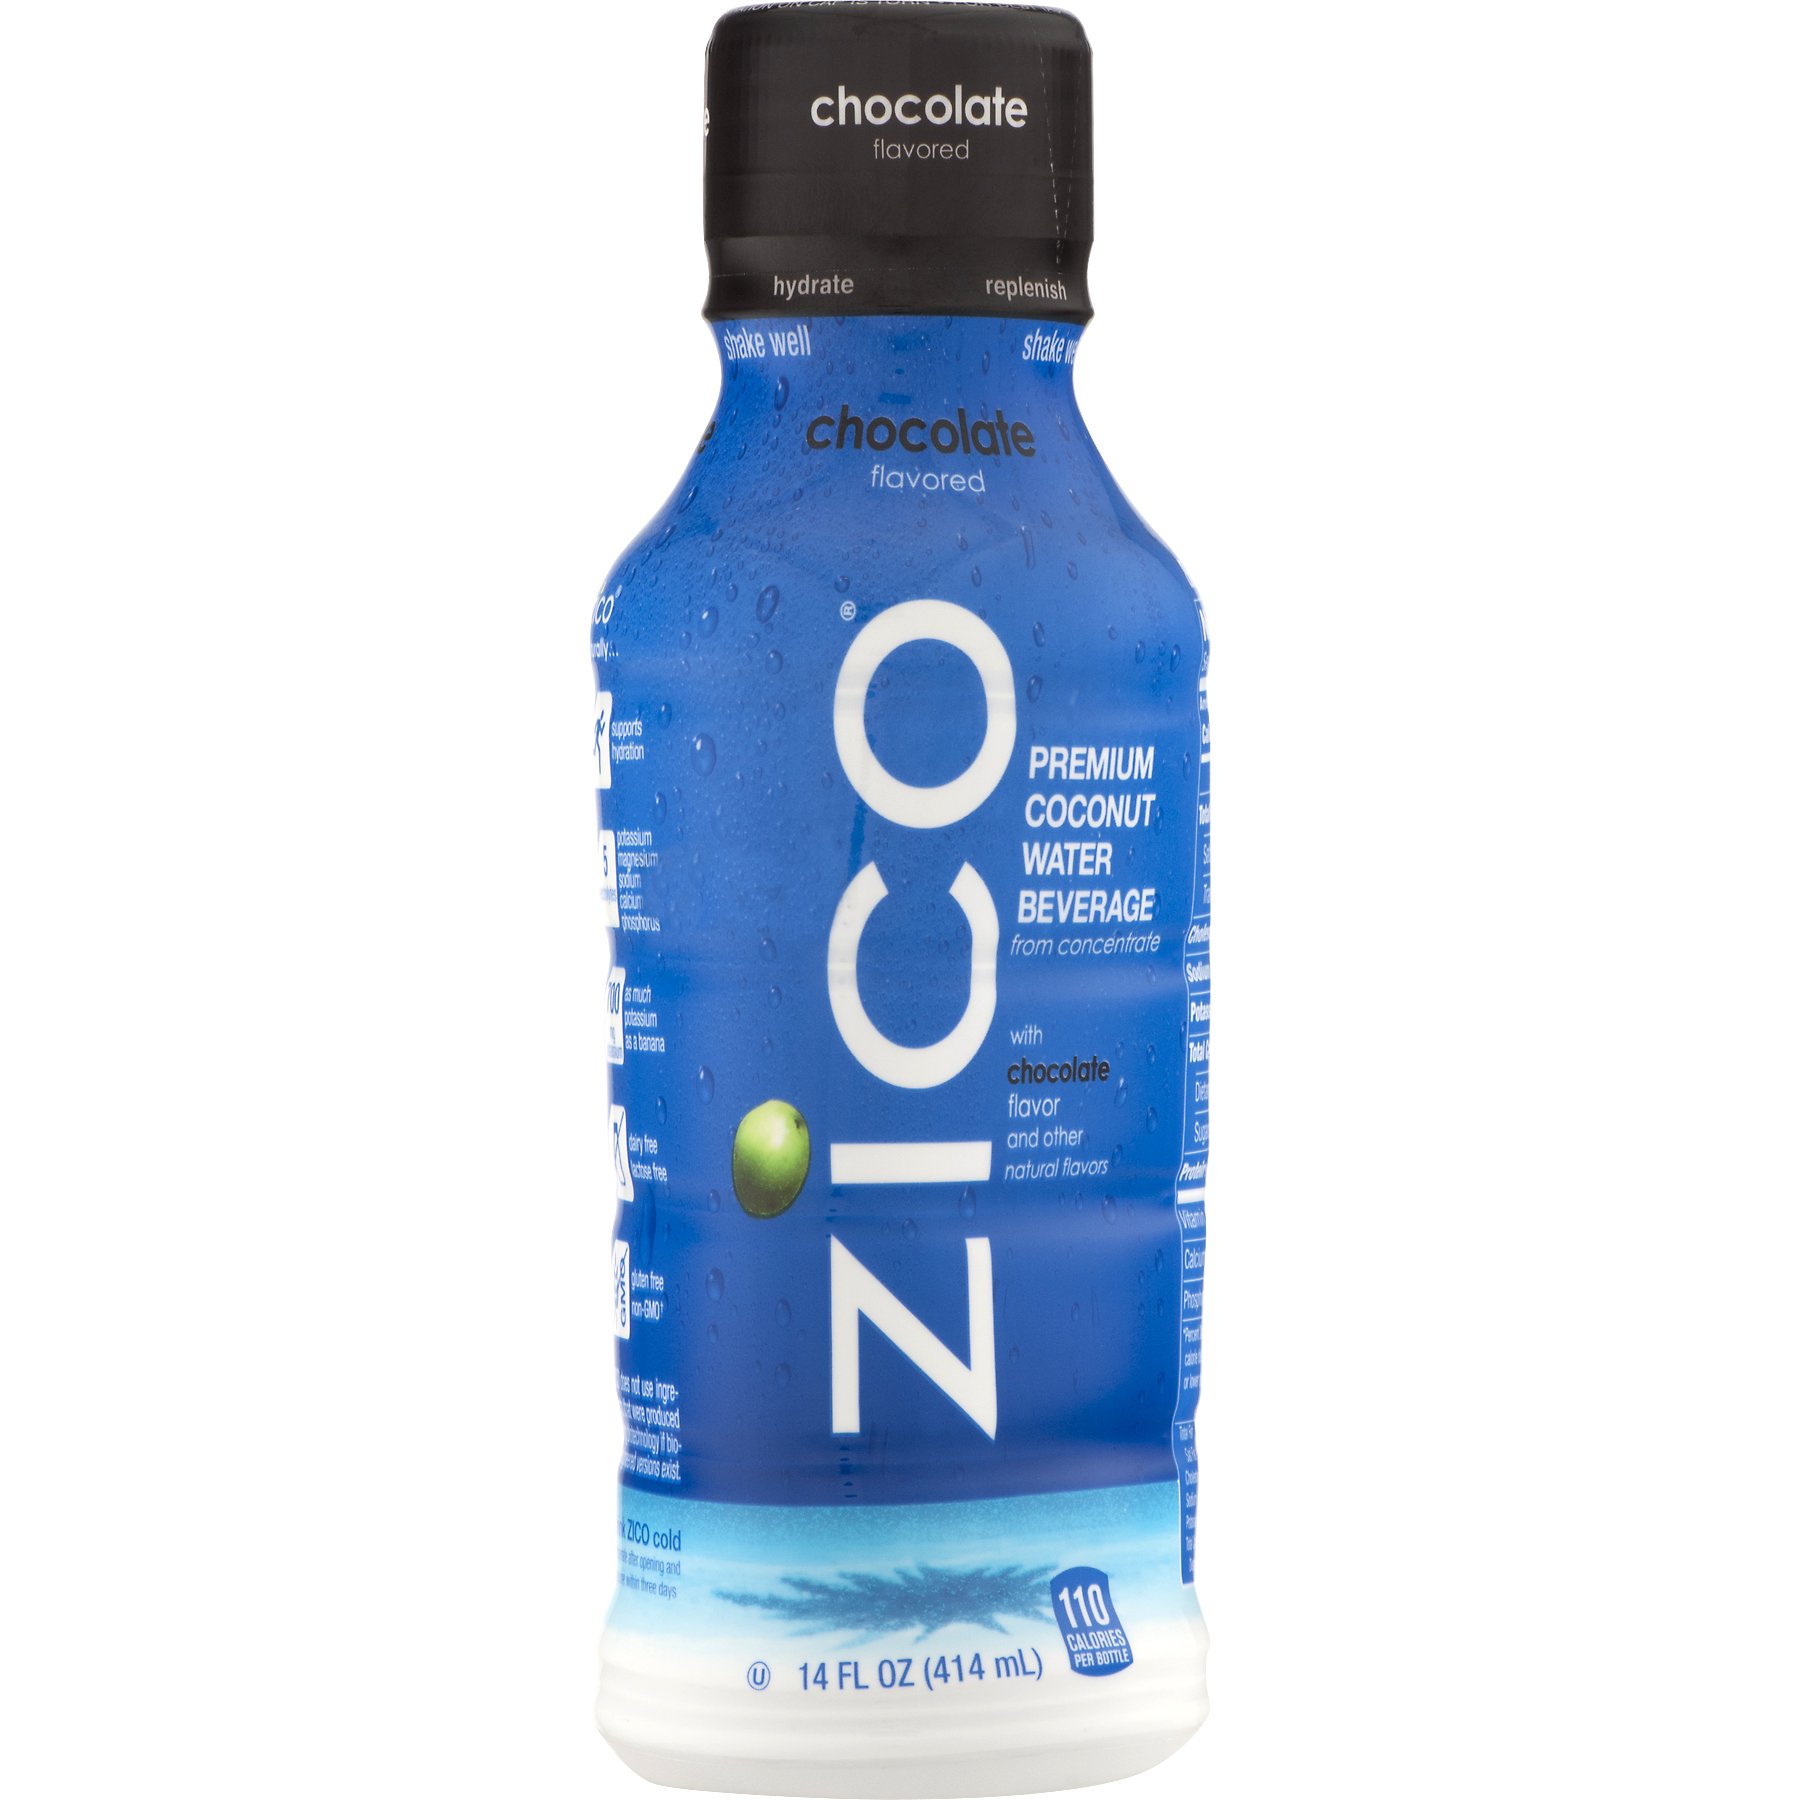 Zico Premium Chocolate Coconut Water, 14 Fl. Oz., 12 Count - image 2 of 5